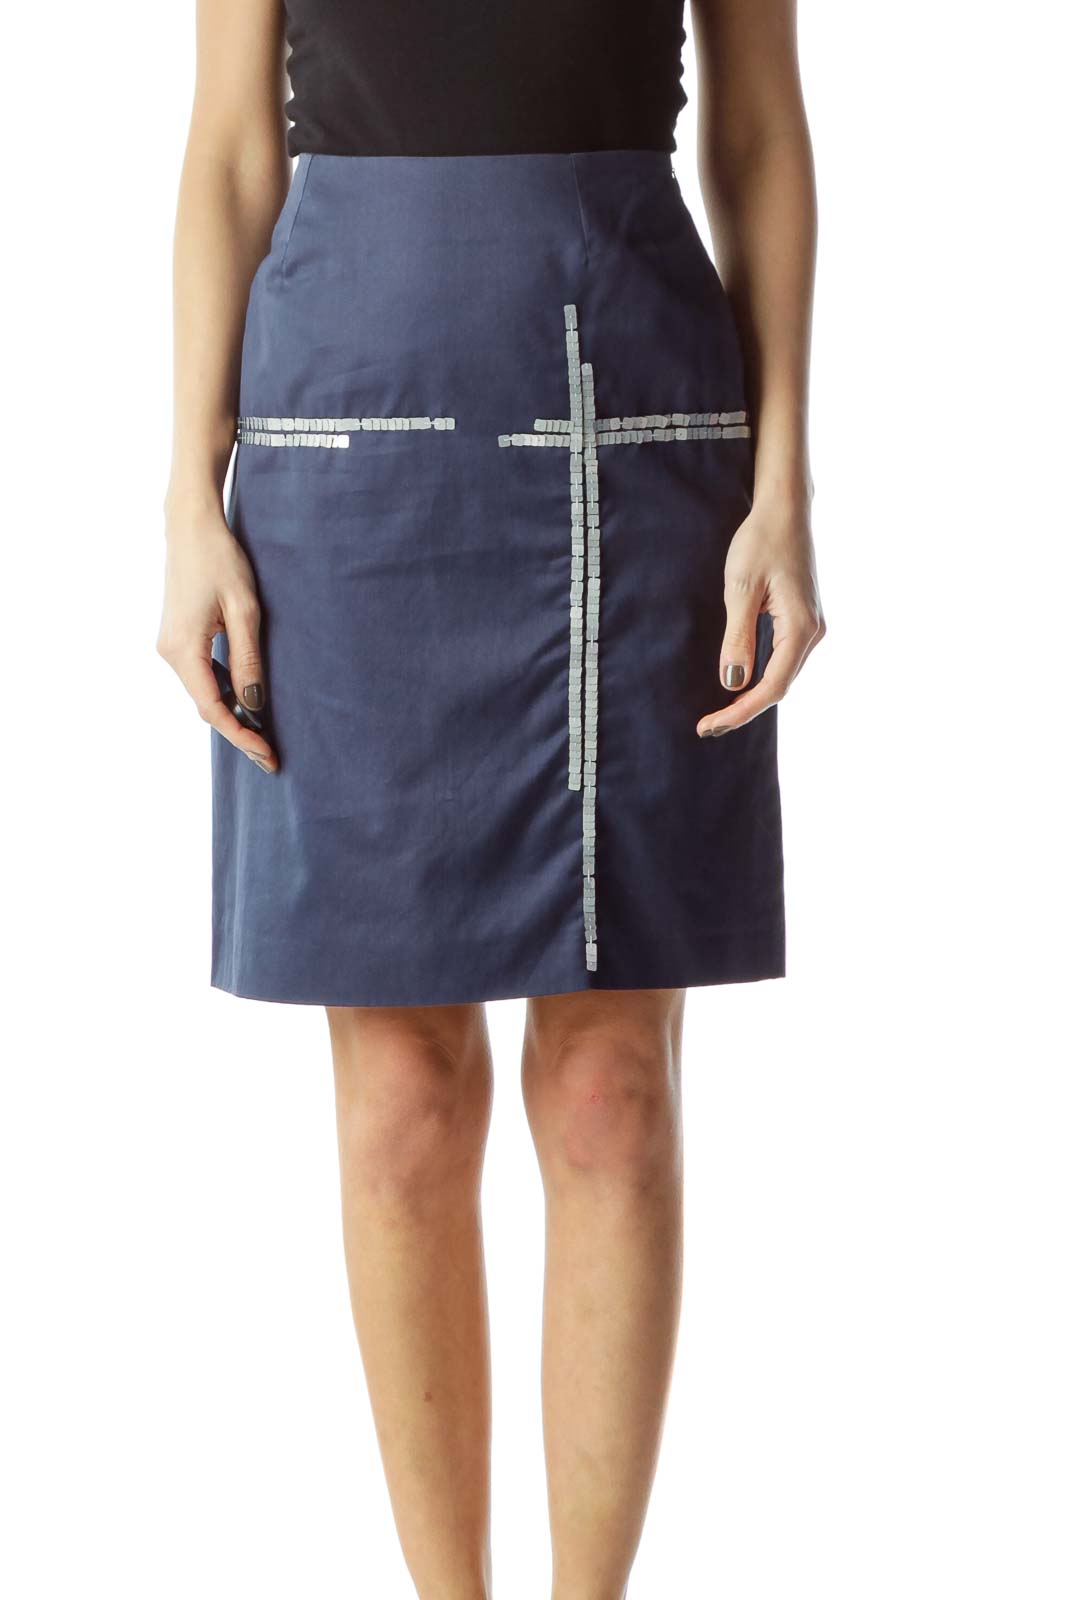 Blue Front Sequin Design A-Line Skirt Front